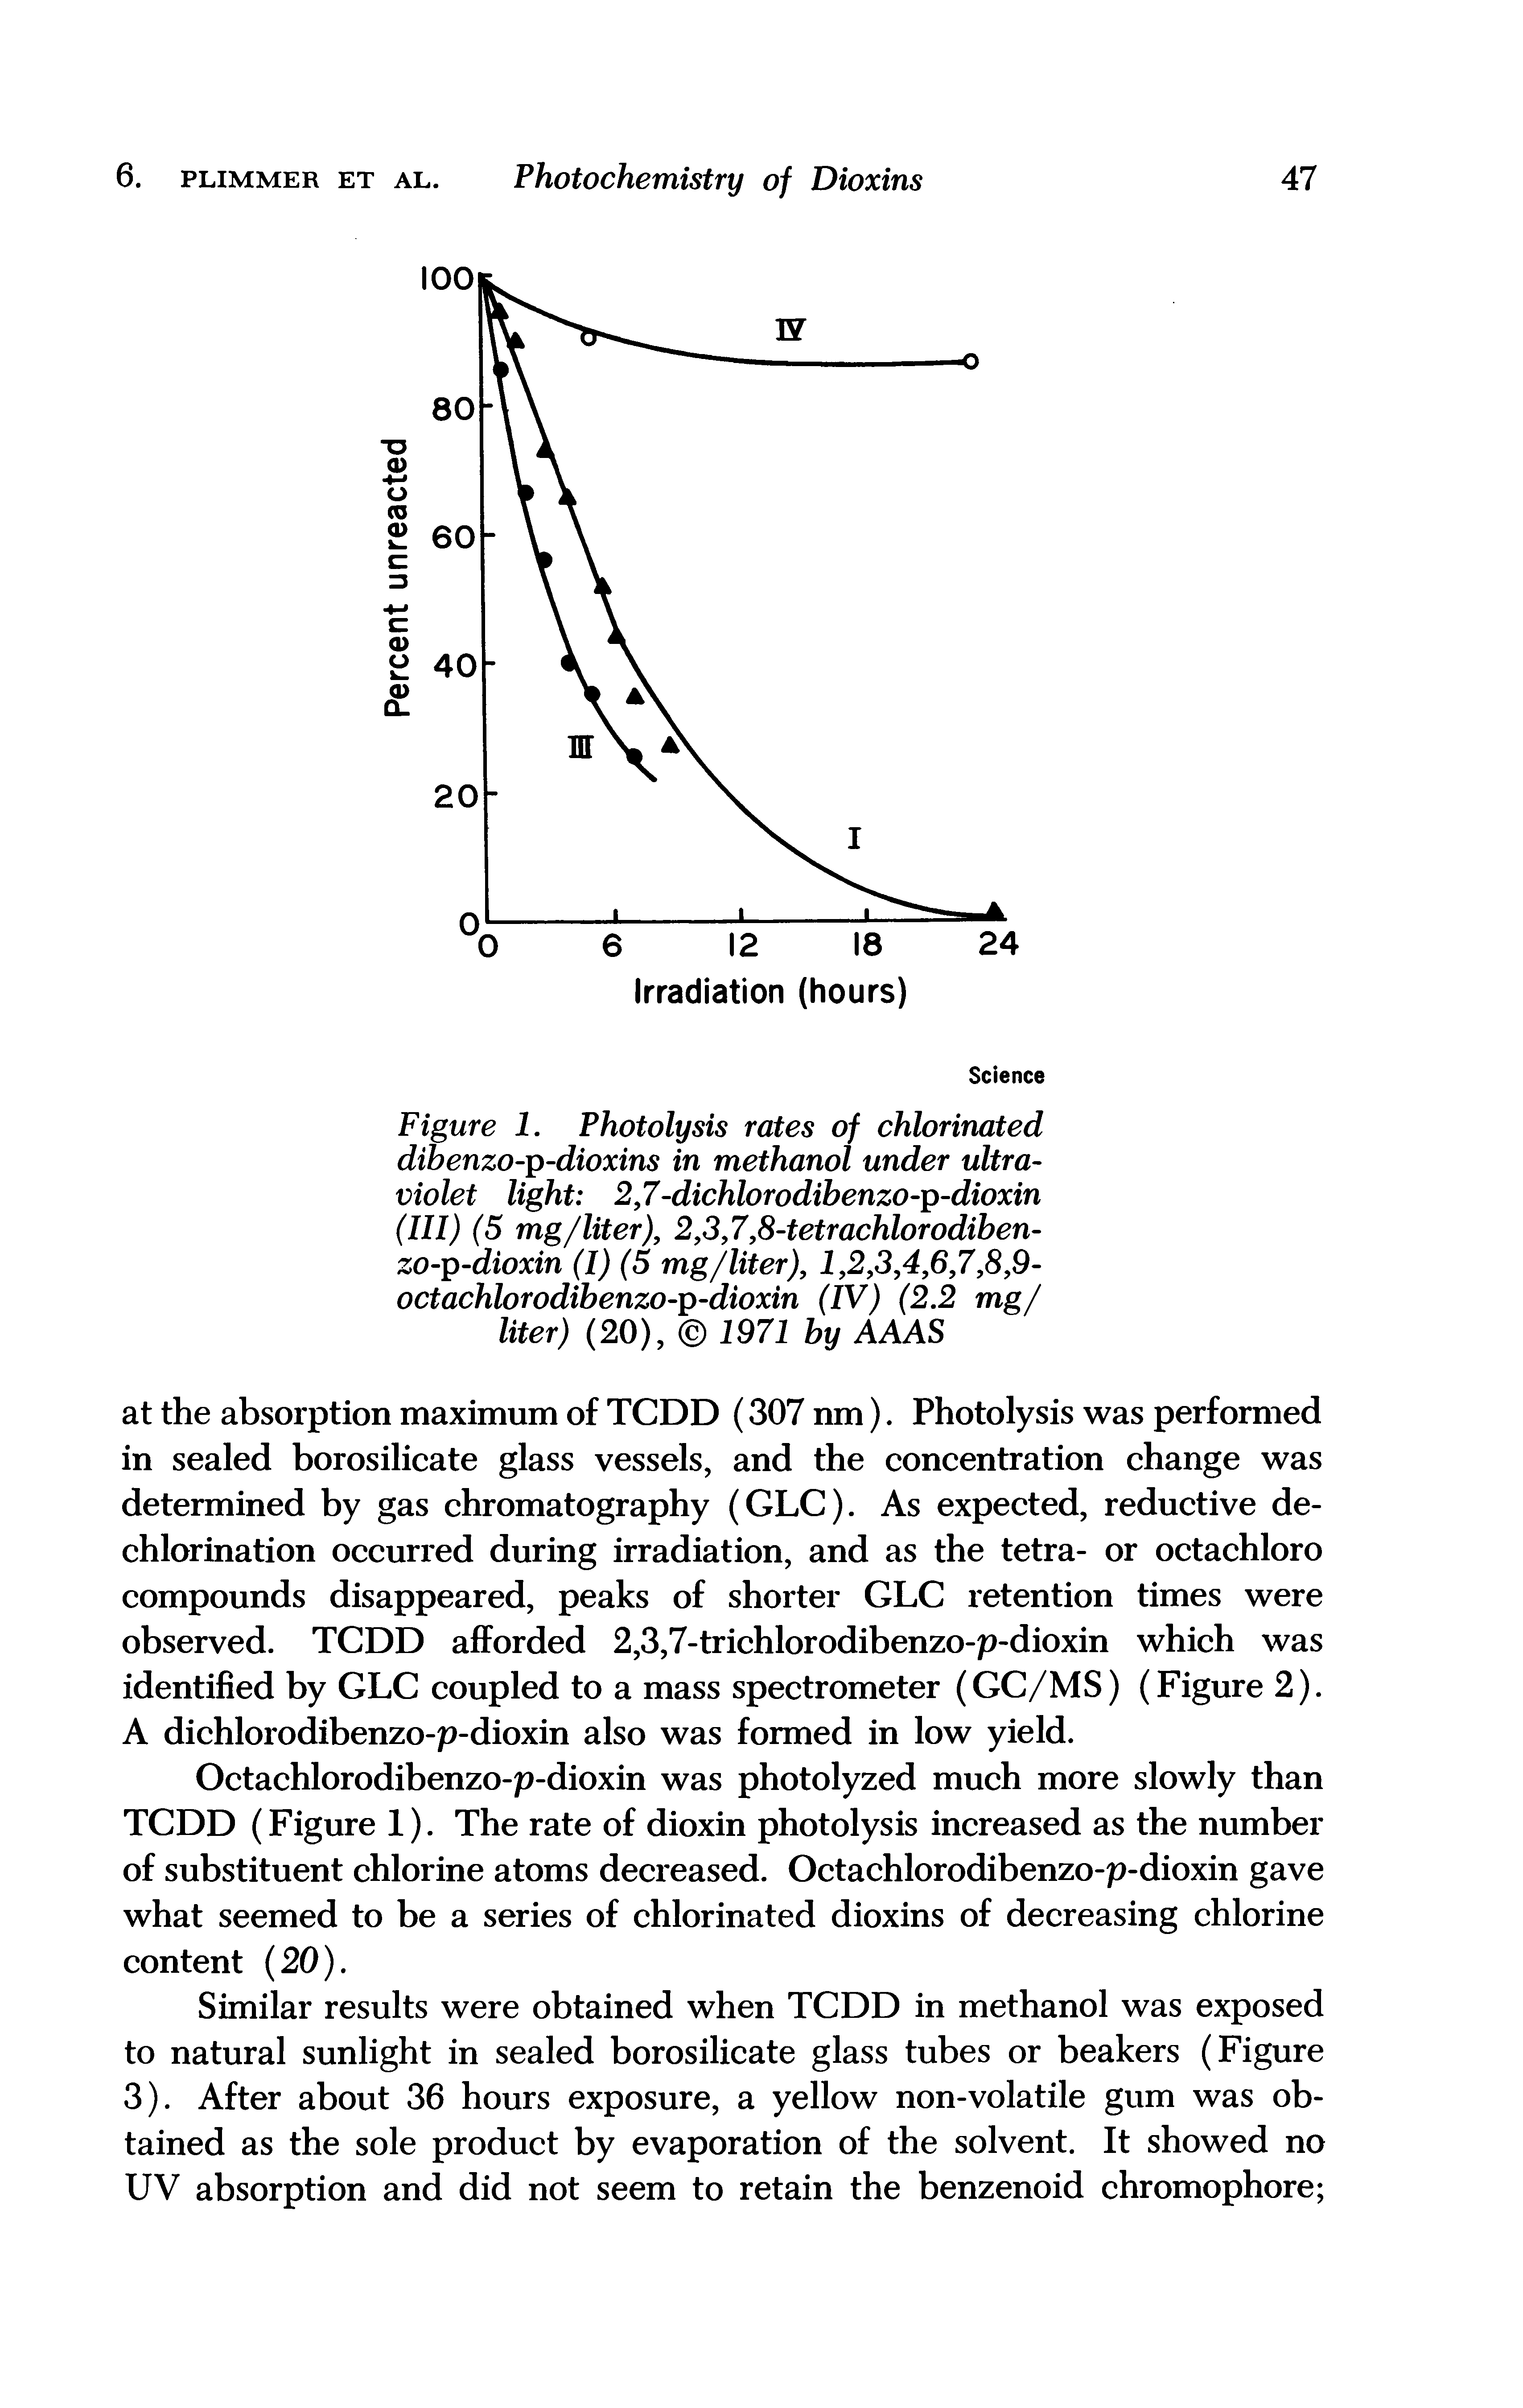 Figure 1. Photolysis rates of chlorinated dibenzo-p-dioxins in methanol under ultraviolet light 2J-dichlorodibenzo-p-dioxin (III) (5 mg/liter), 2,3,7,8-tetrachlorodiben-zo-p-dioxin (I) (5 mg/liter), 1,2,3,4,6,7,8,9-octachlorodibenzo-p-dioxin (IV) (2.2 mg/ liter) (20), 1971 by AAAS...